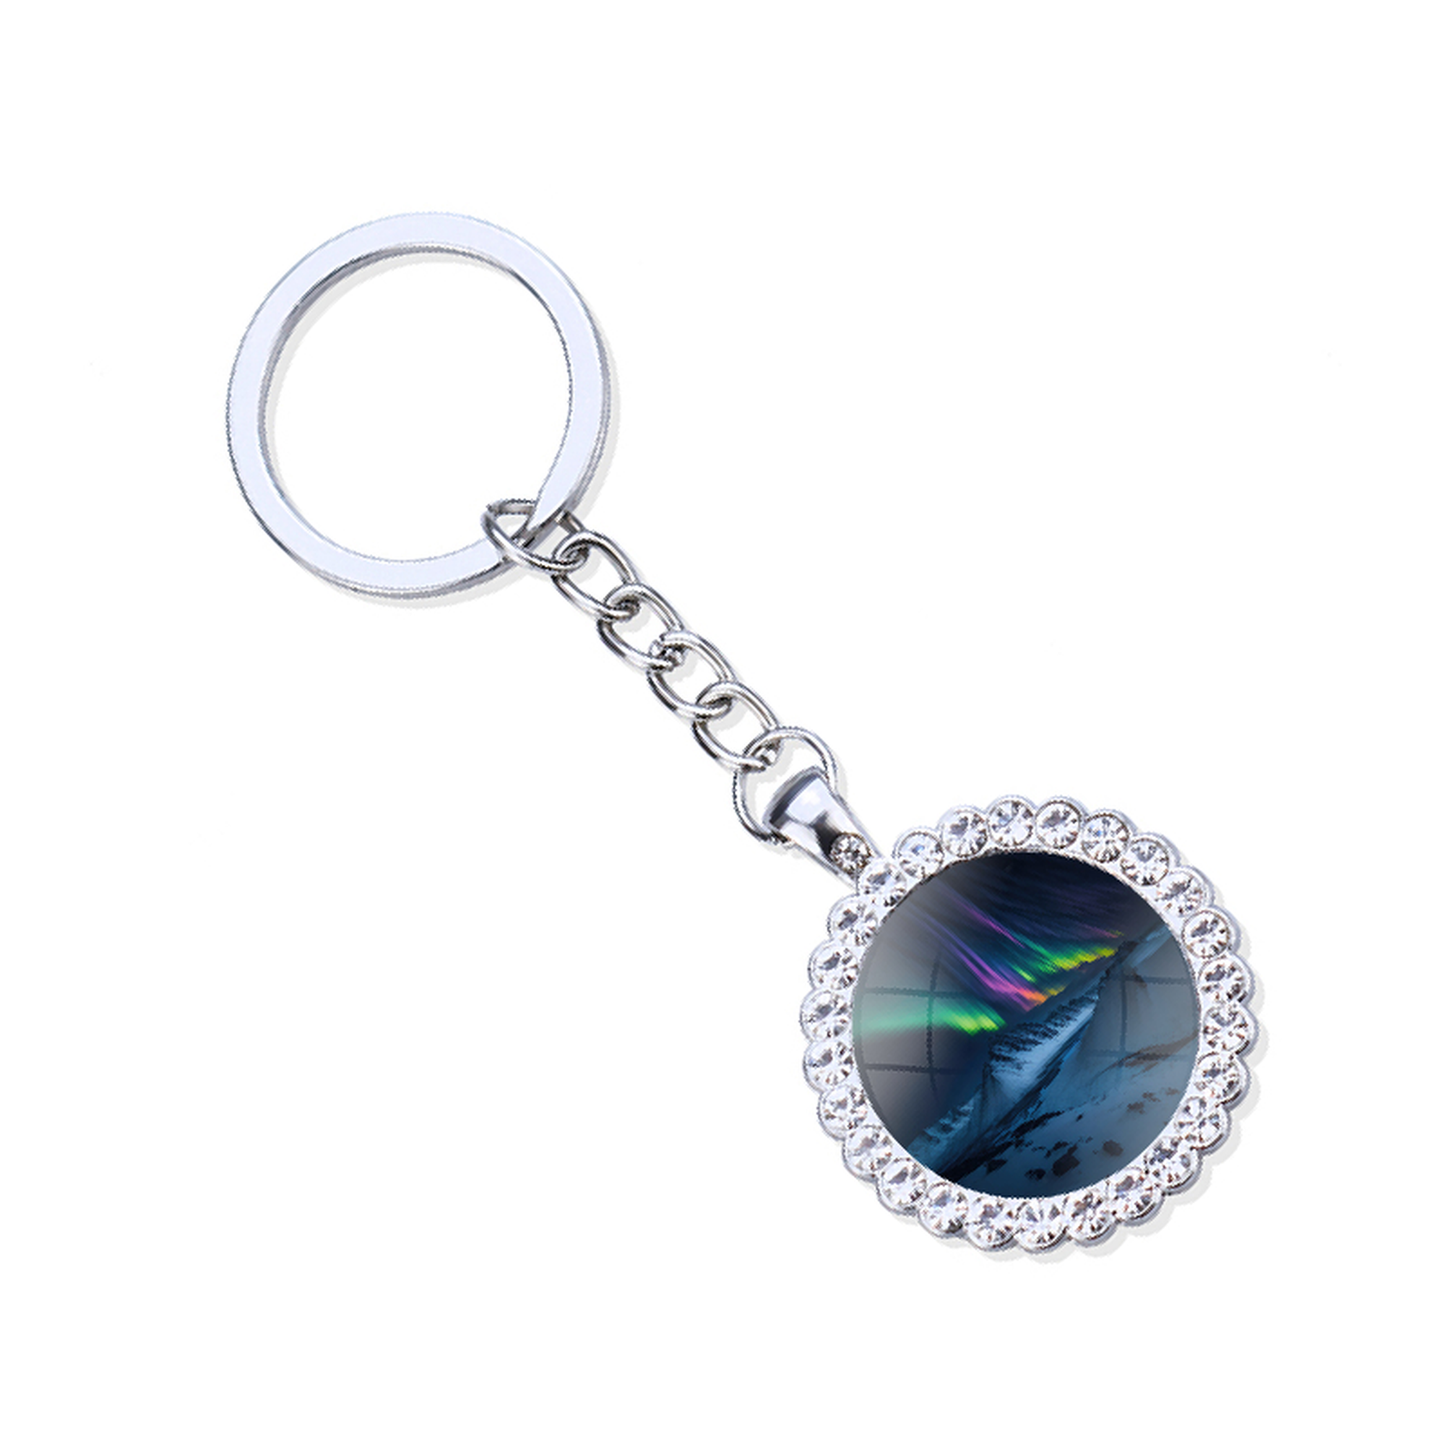 Aurora Borealis Silver Keyring - Northern Light Jewelry - Rhinestones Glass Key Chain - Perfect Aurora Lovers Gift 12